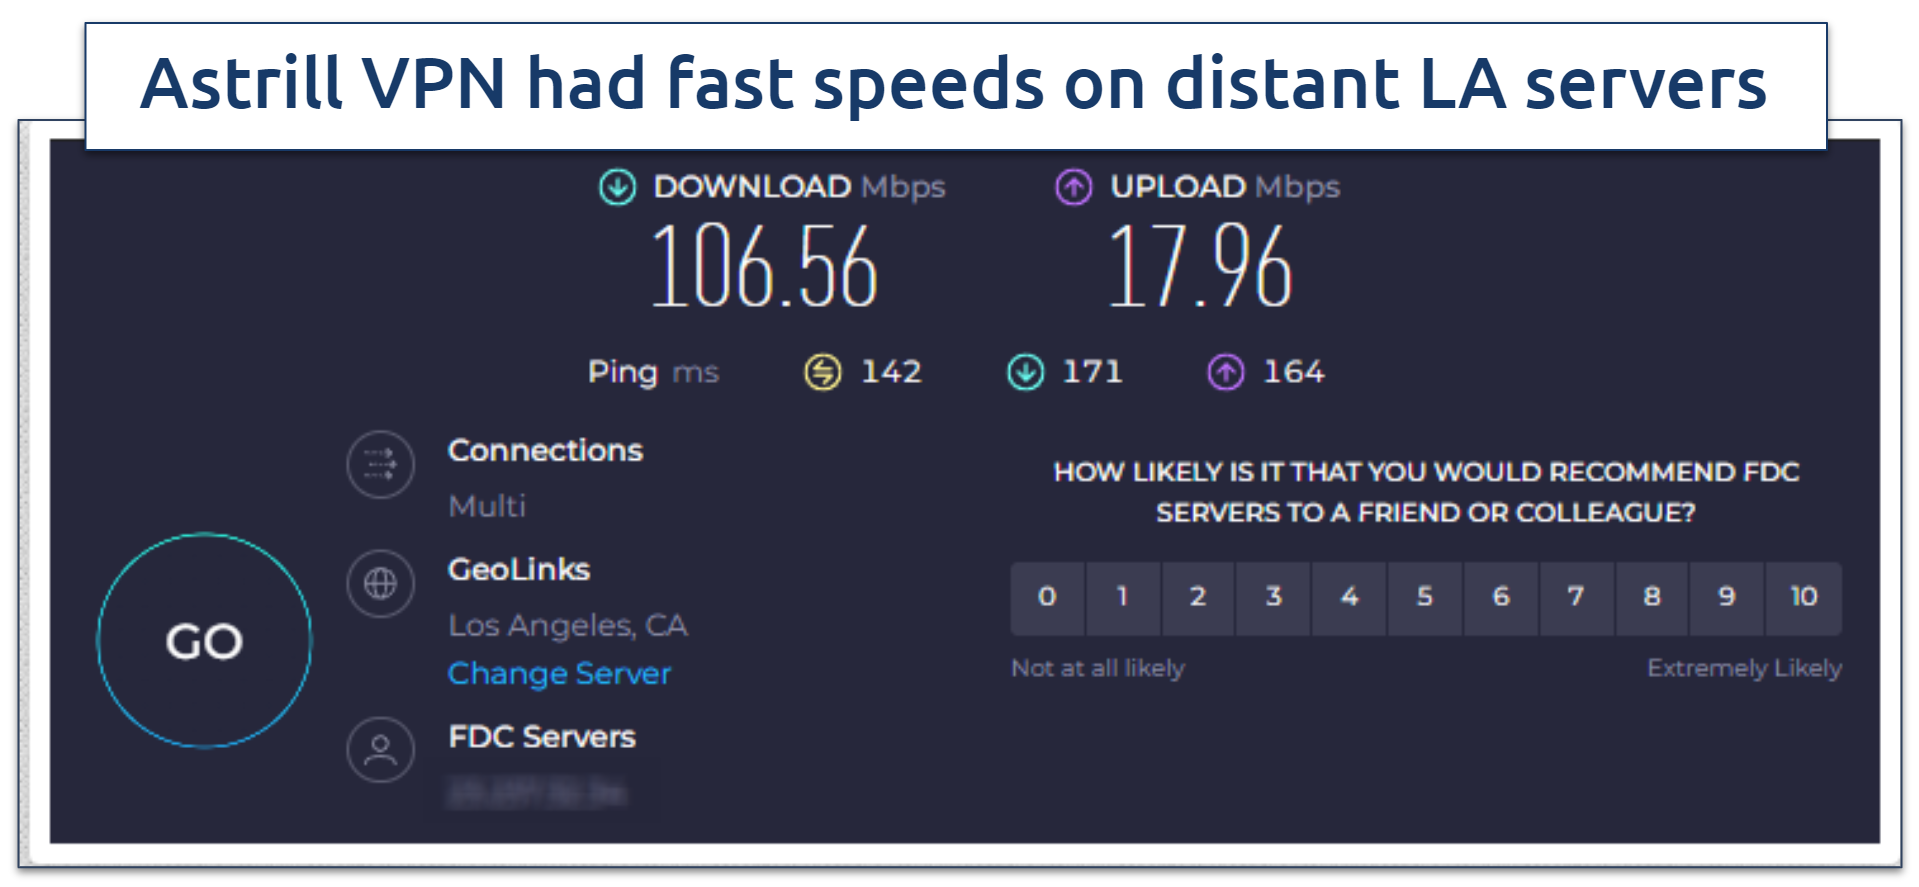 Astrill VPN speed tests result on a US server